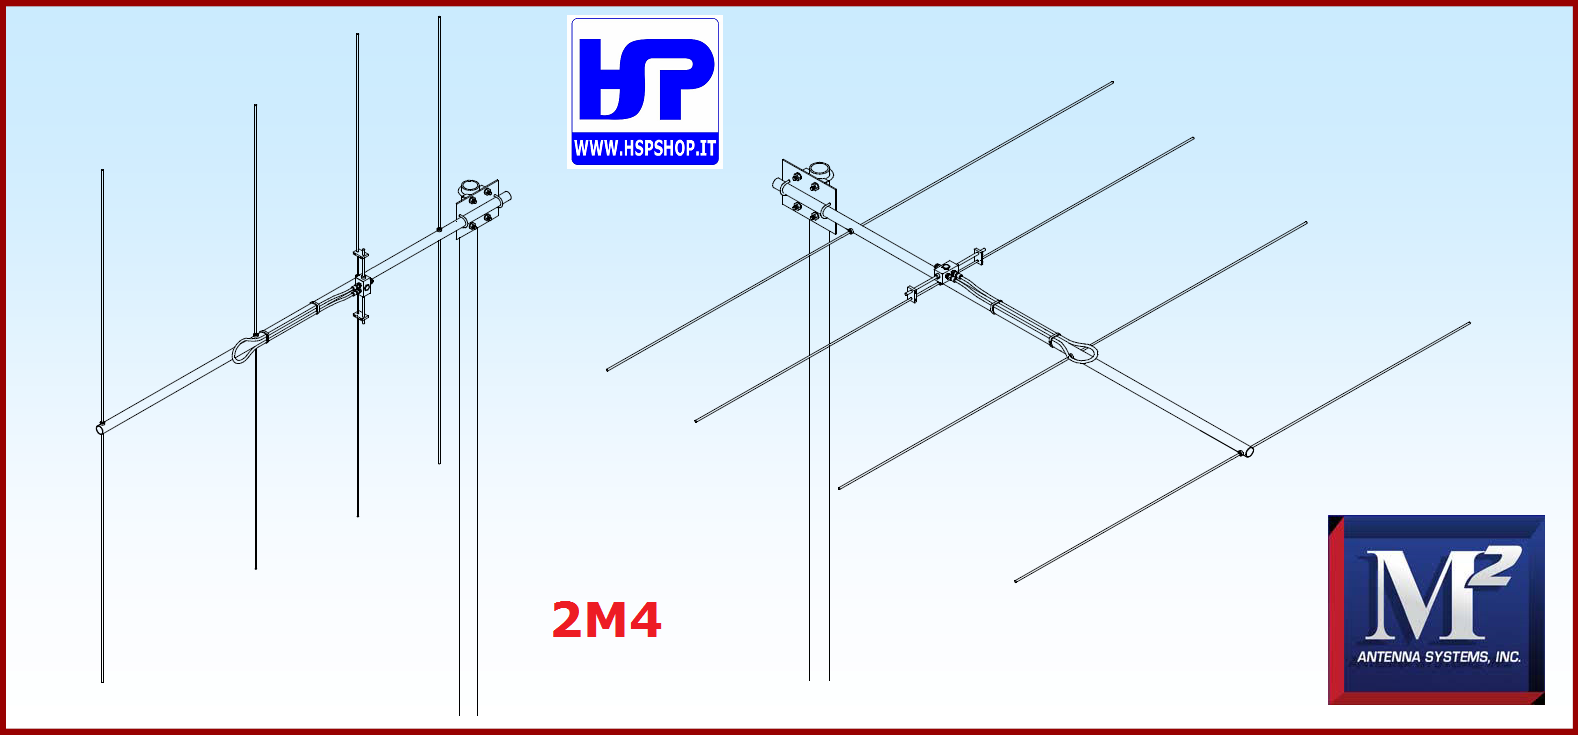 M2 - 2M4 - 4 ELEMENTI VHF 144-148 MHz